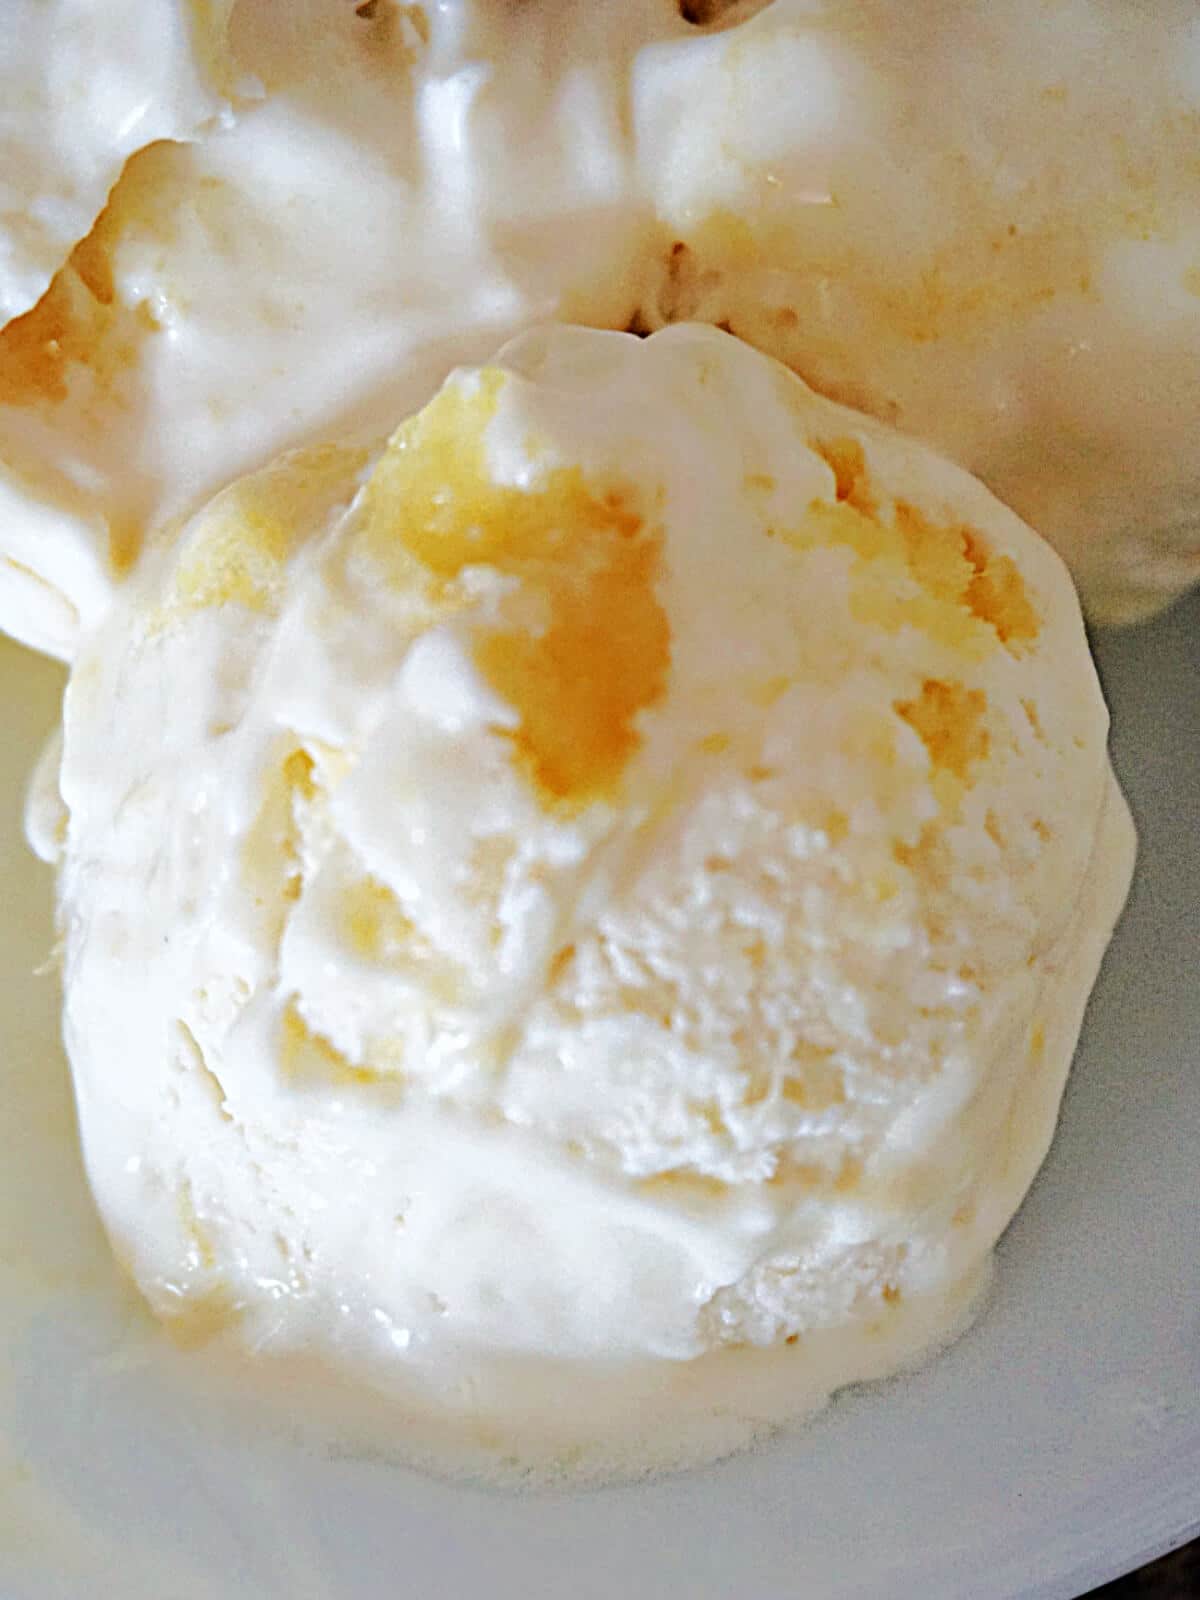 Close-up shot of a scoop of ice cream